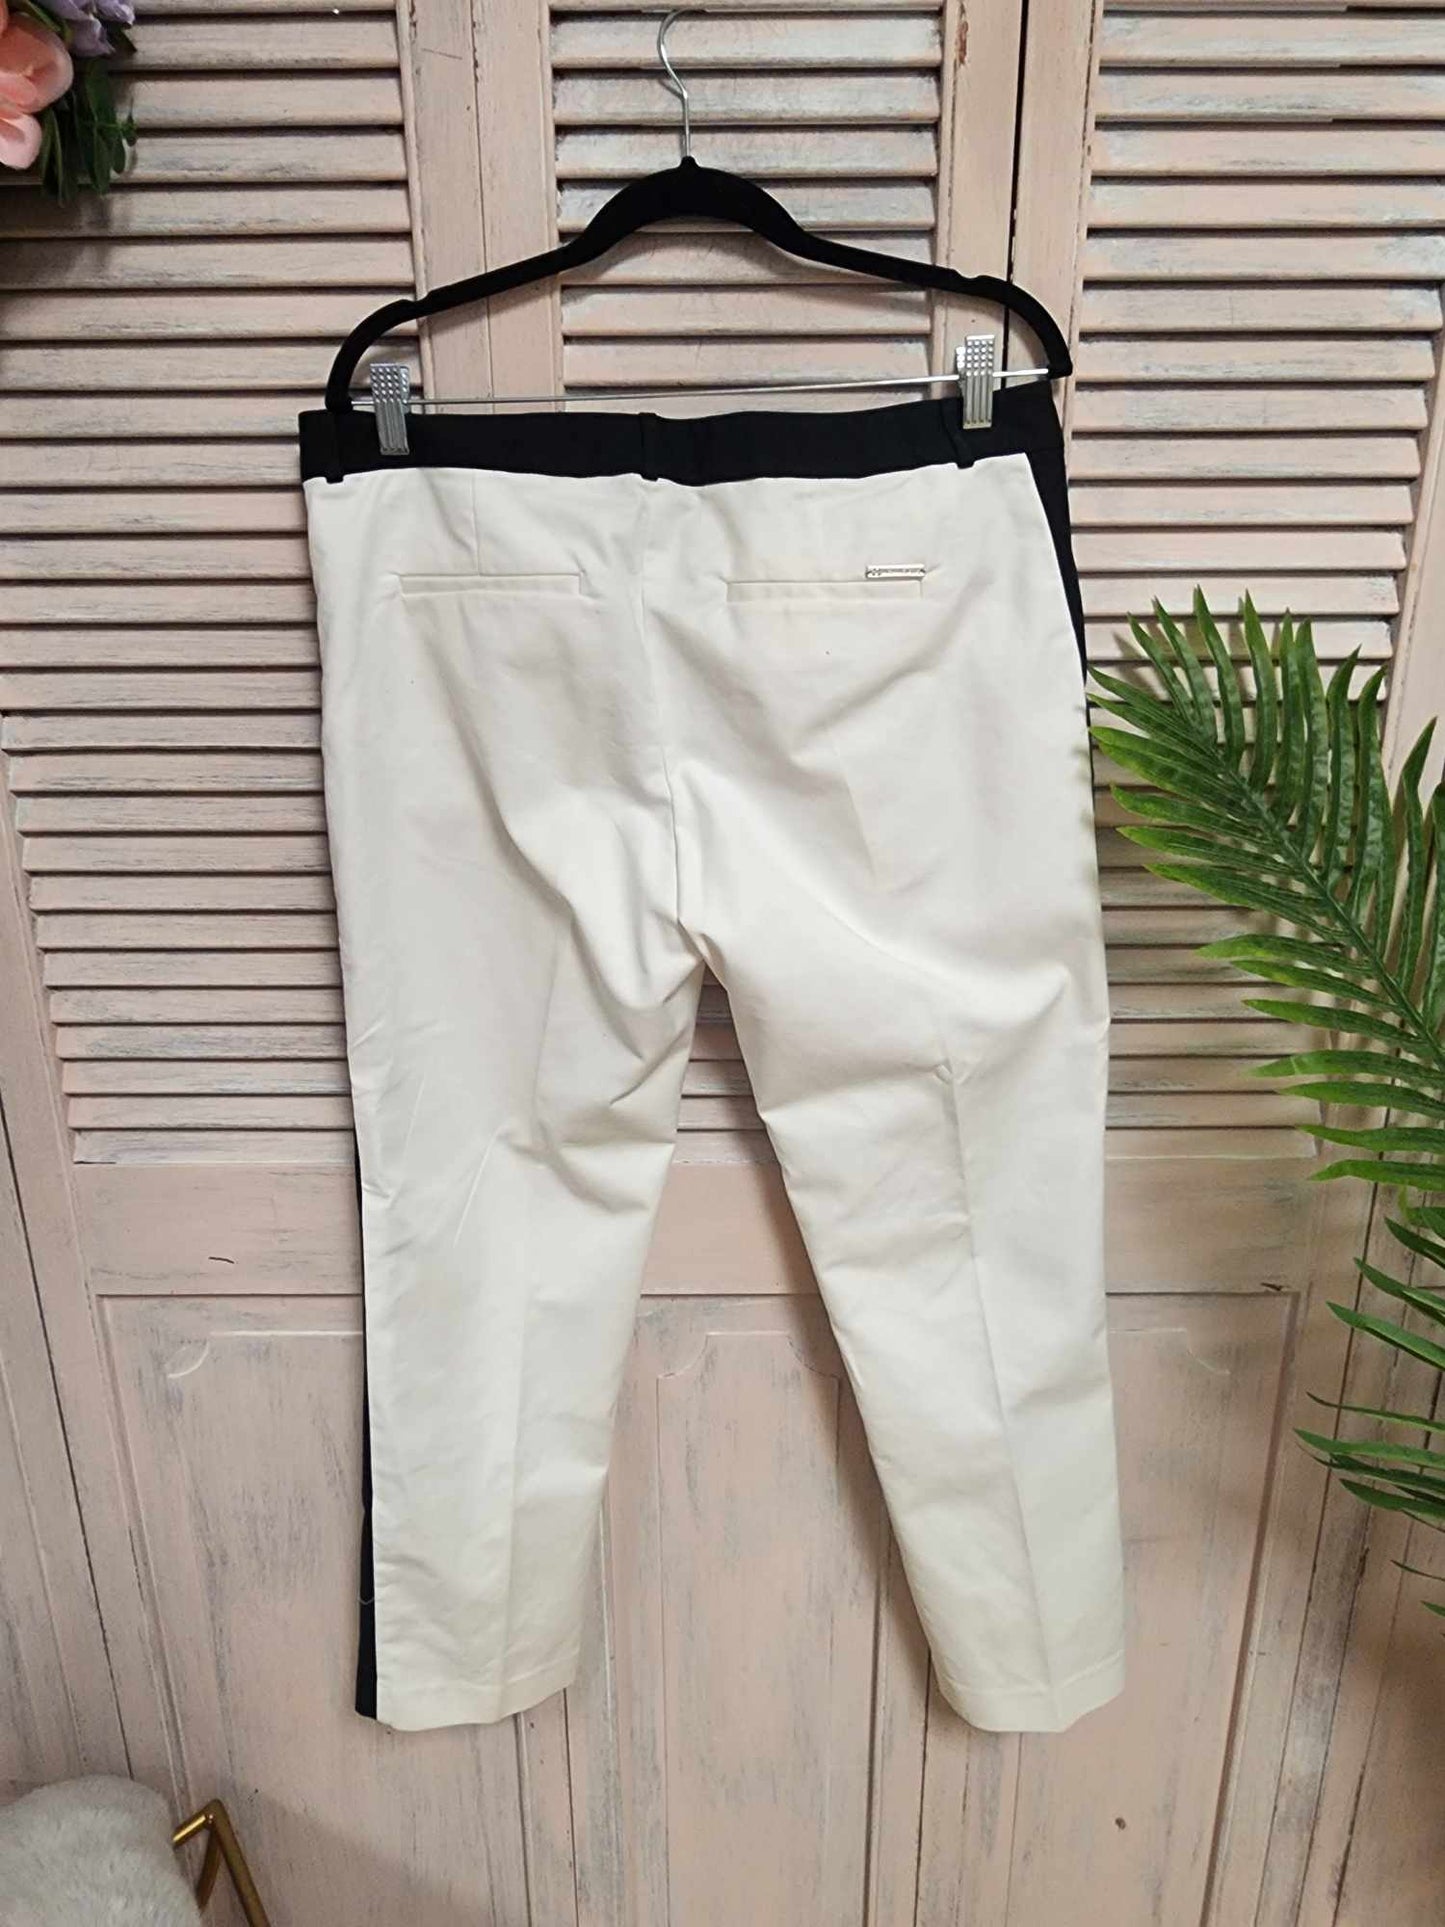 Michael Kors Dress Pants